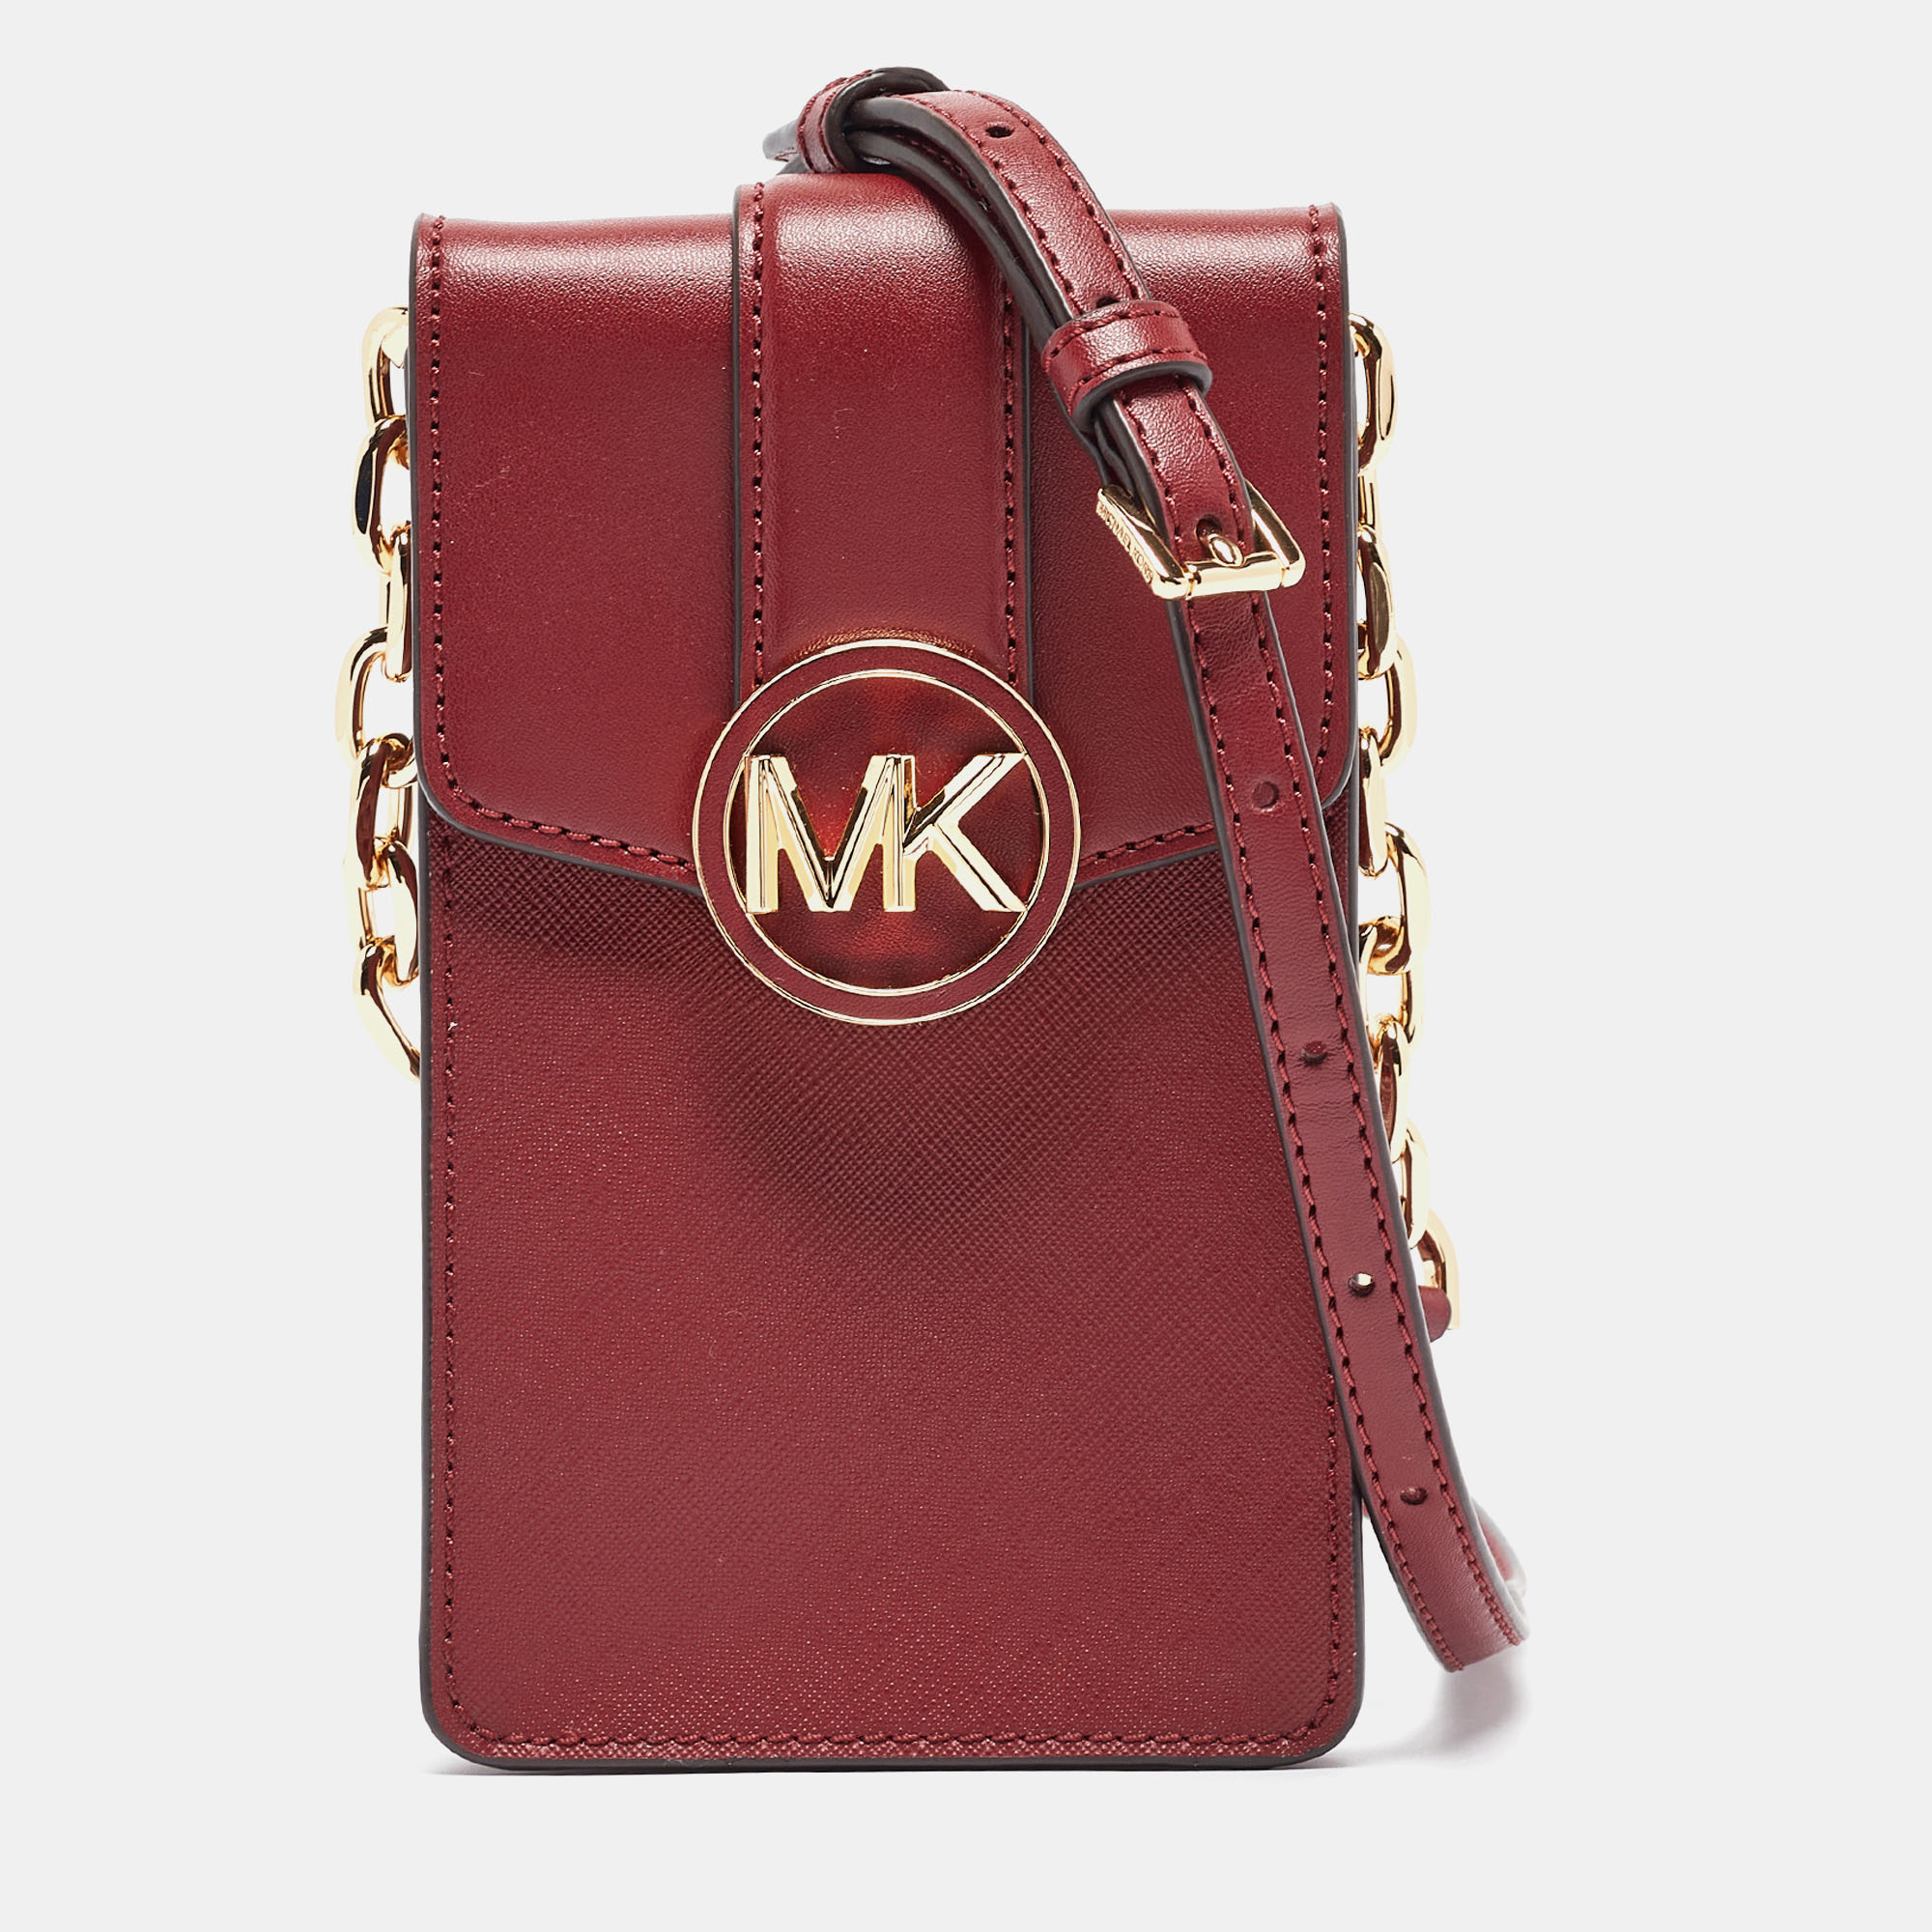 Michael kors burgundy leather carmen smartphone crossbody bag